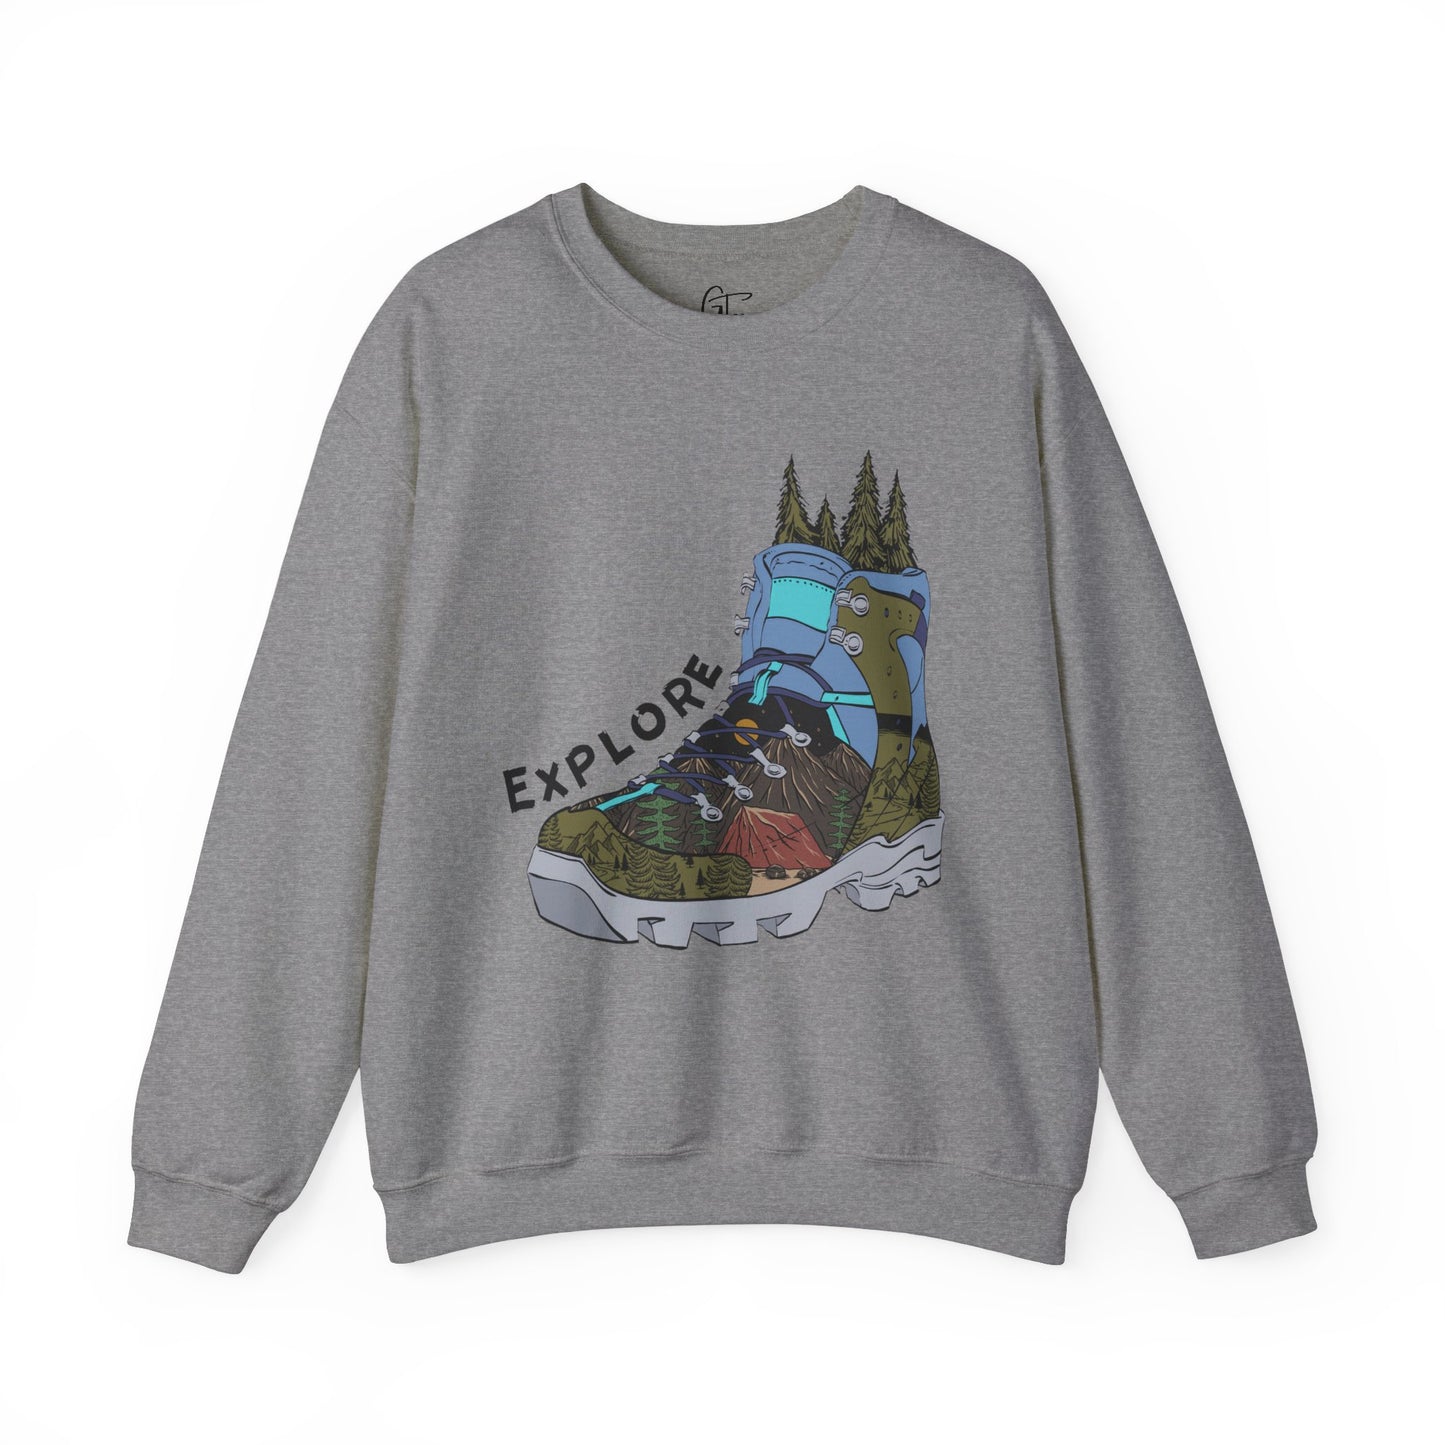 Explore More Sweatshirt